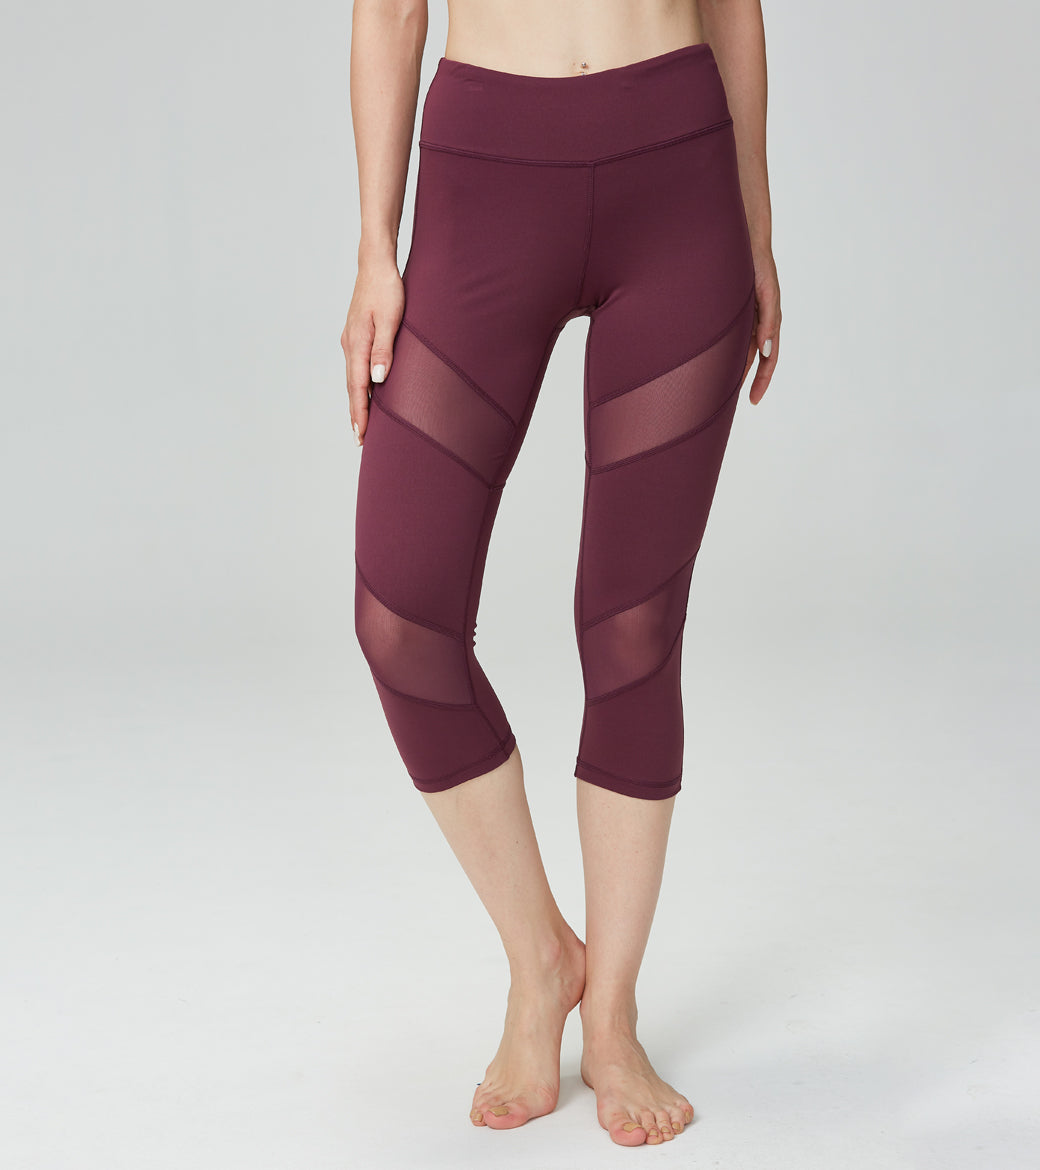 LOVESOFT Purple Mesh Workout High Waist Yoga Pants